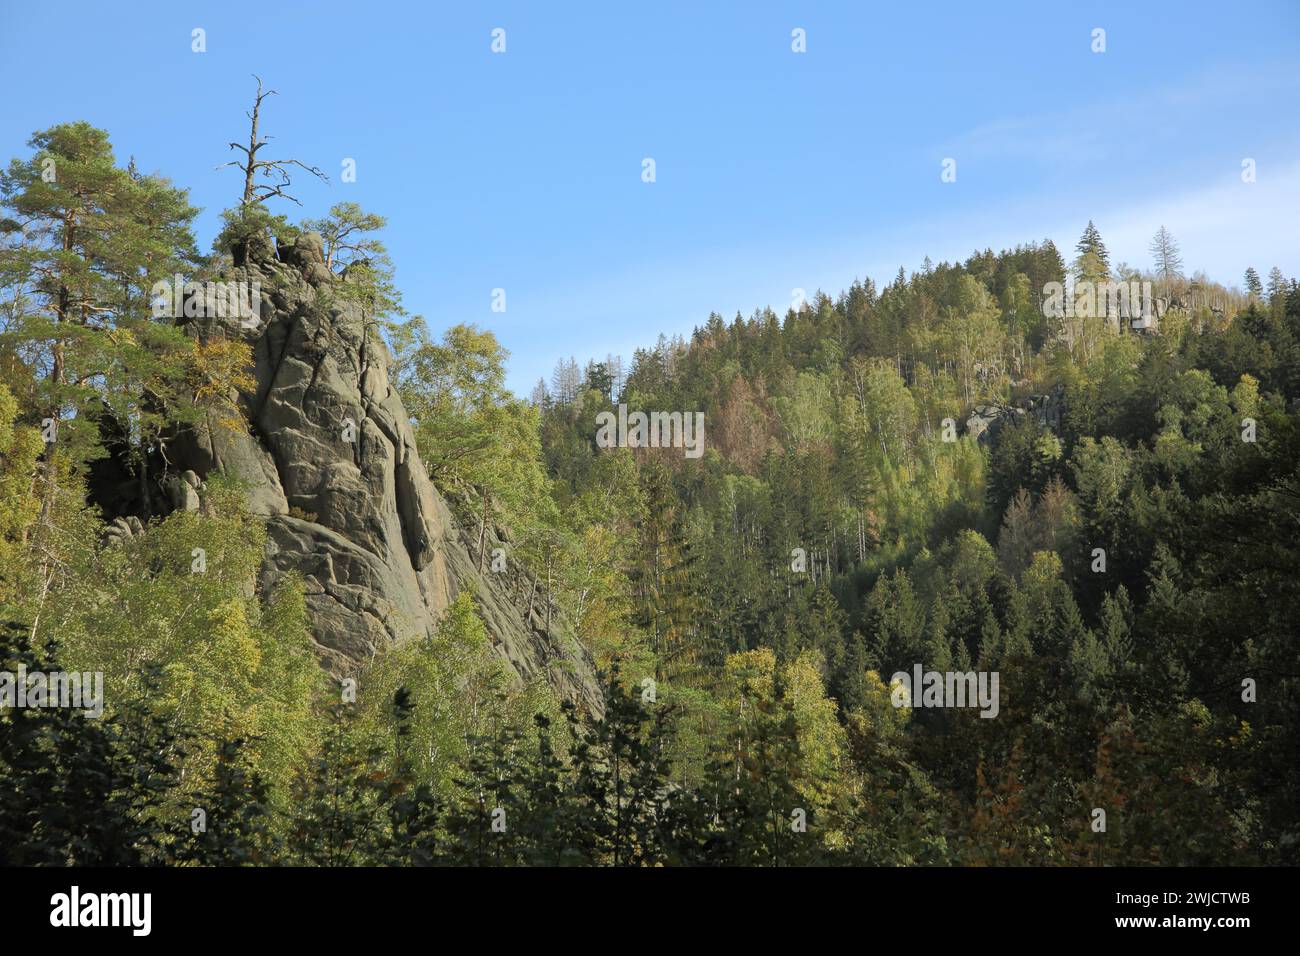 Adlerklippe à Okertal, falaise, rochers, forêt, paysage, nature, Harz, basse-Saxe, Allemagne Banque D'Images